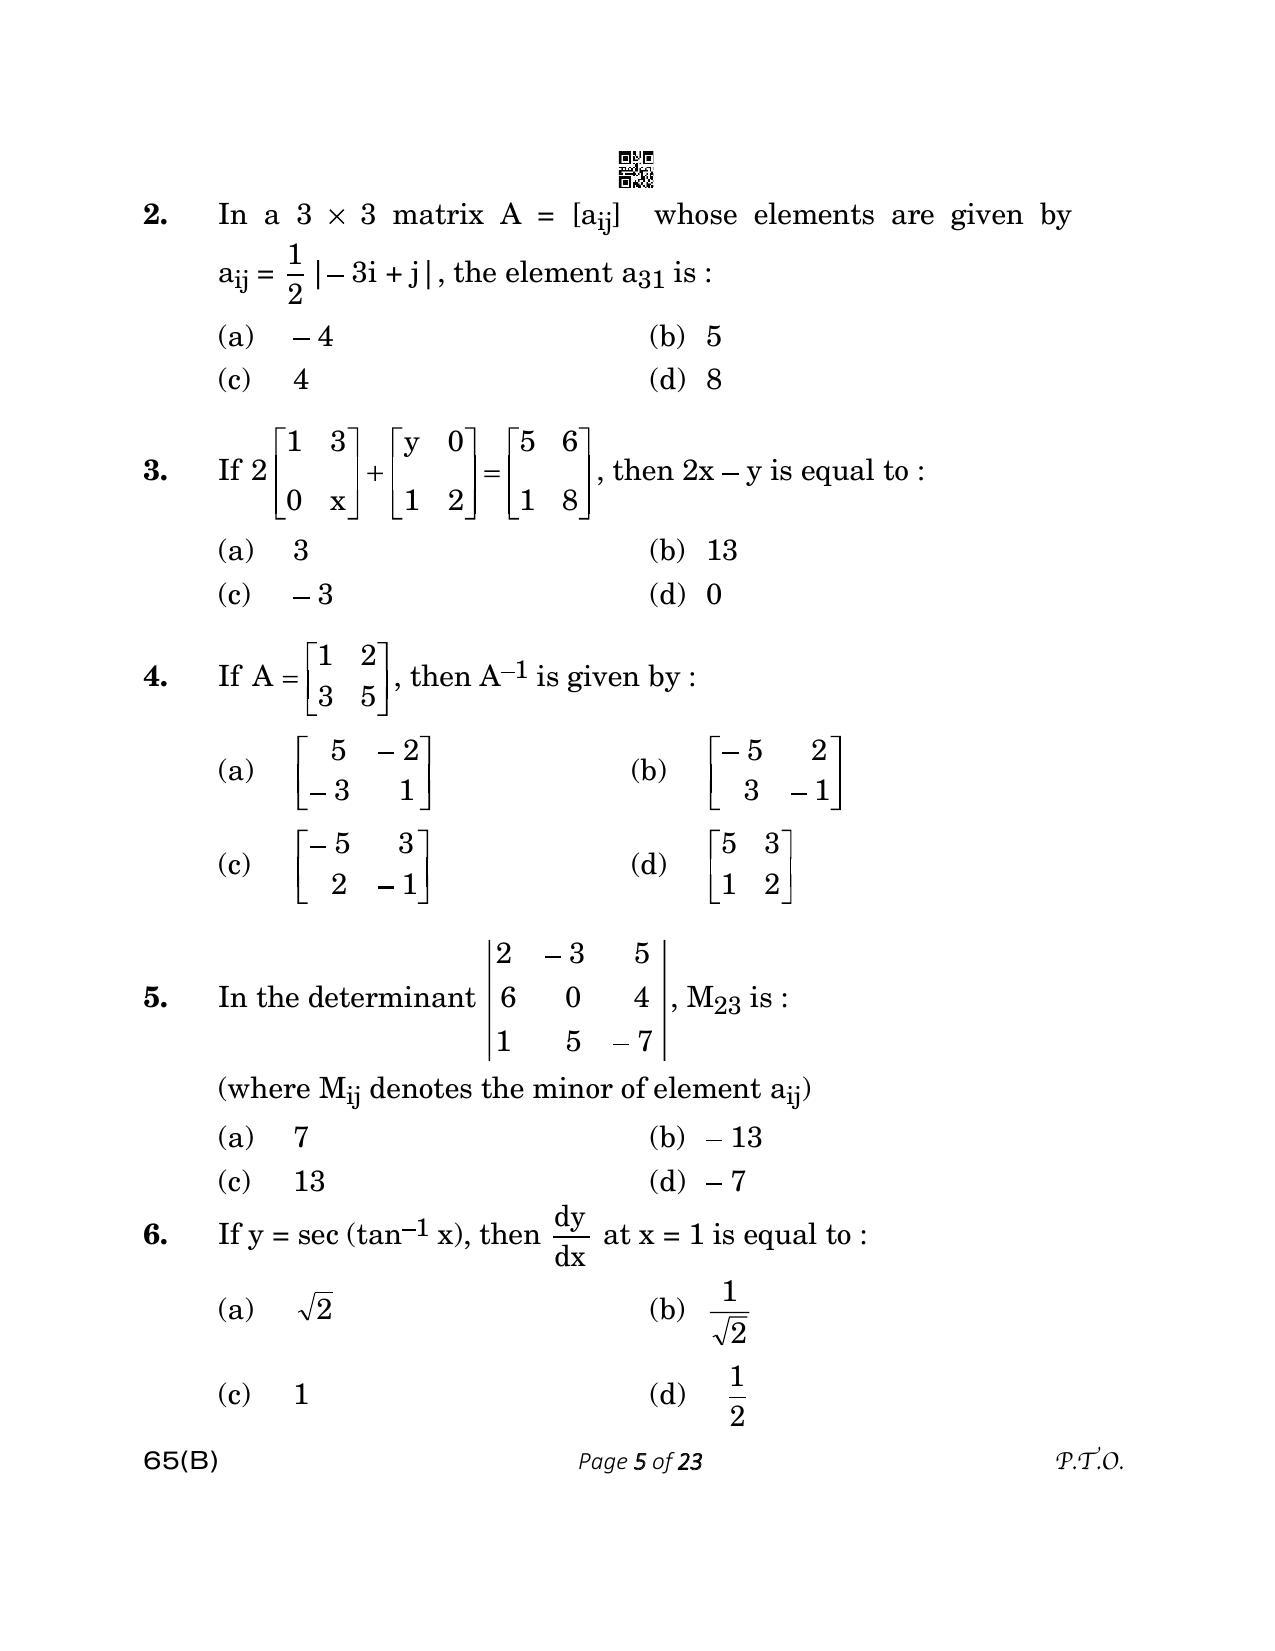 CBSE Class 12 65(B) MATHEMATICS FOR VI 2023 Question Paper - Page 5